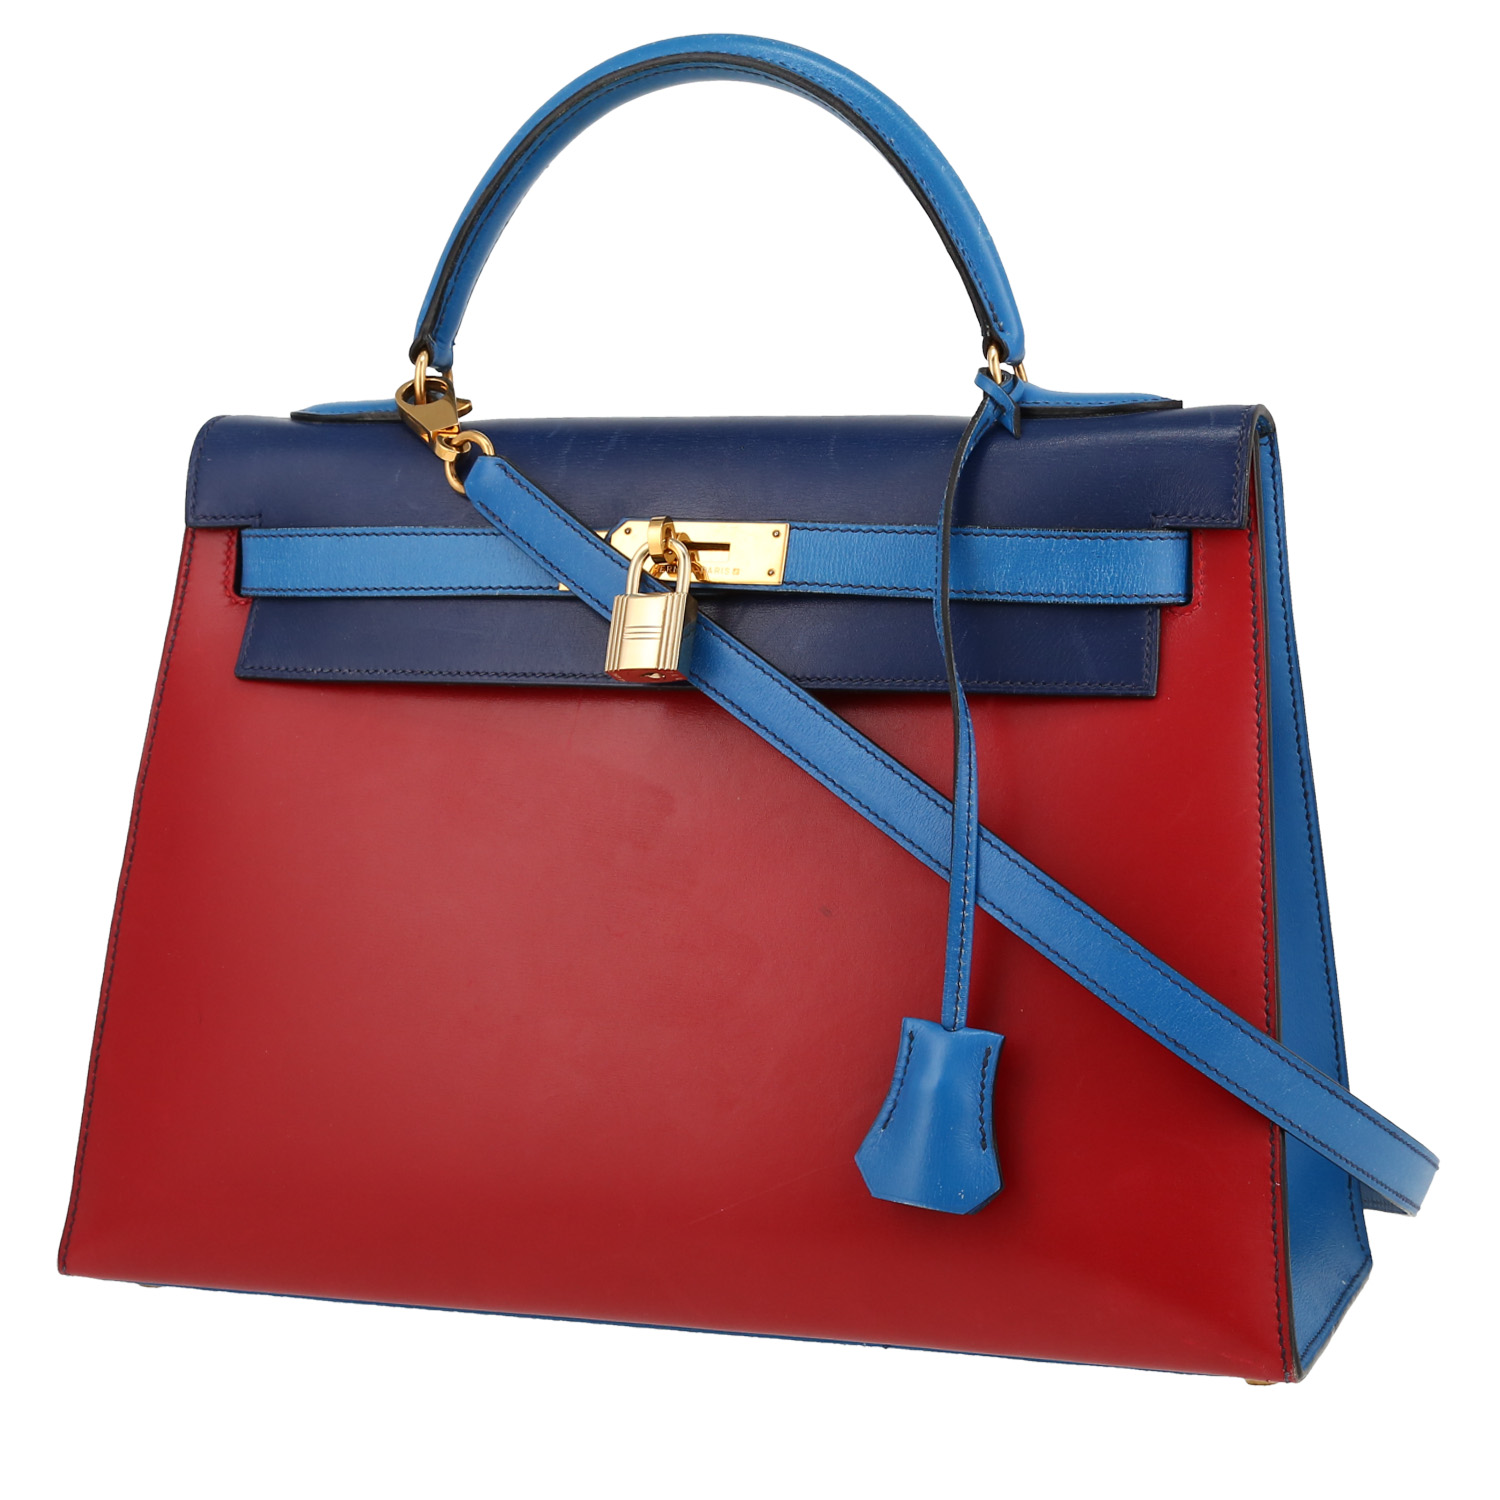 Chanel Chanel Sports Line Tricolor Blue/Orange/Red Small Shoulder Bag